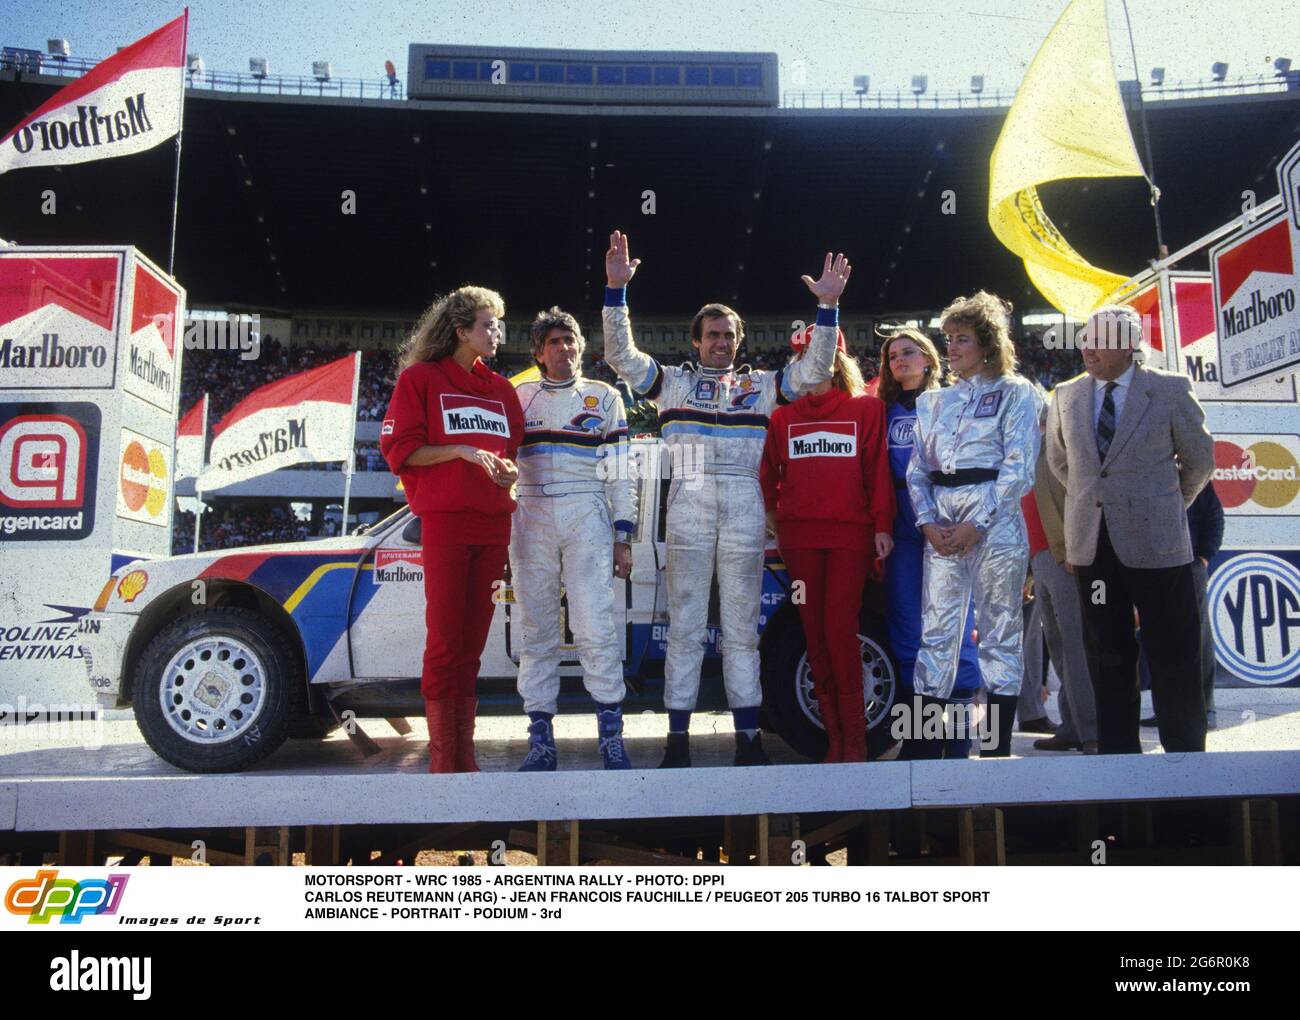 MOTORSPORT - WRC 1985 - ARGENTINIEN RALLYE - FOTO: DPPI CARLOS REUTEMANN (ARG) - JEAN FRANCOIS FAUCHILLE / PEUGEOT 205 TURBO 16 TALBOT SPORT - AMBIENTE - PORTRAIT - PODIUM - 3. # 00000353 049 Stockfoto